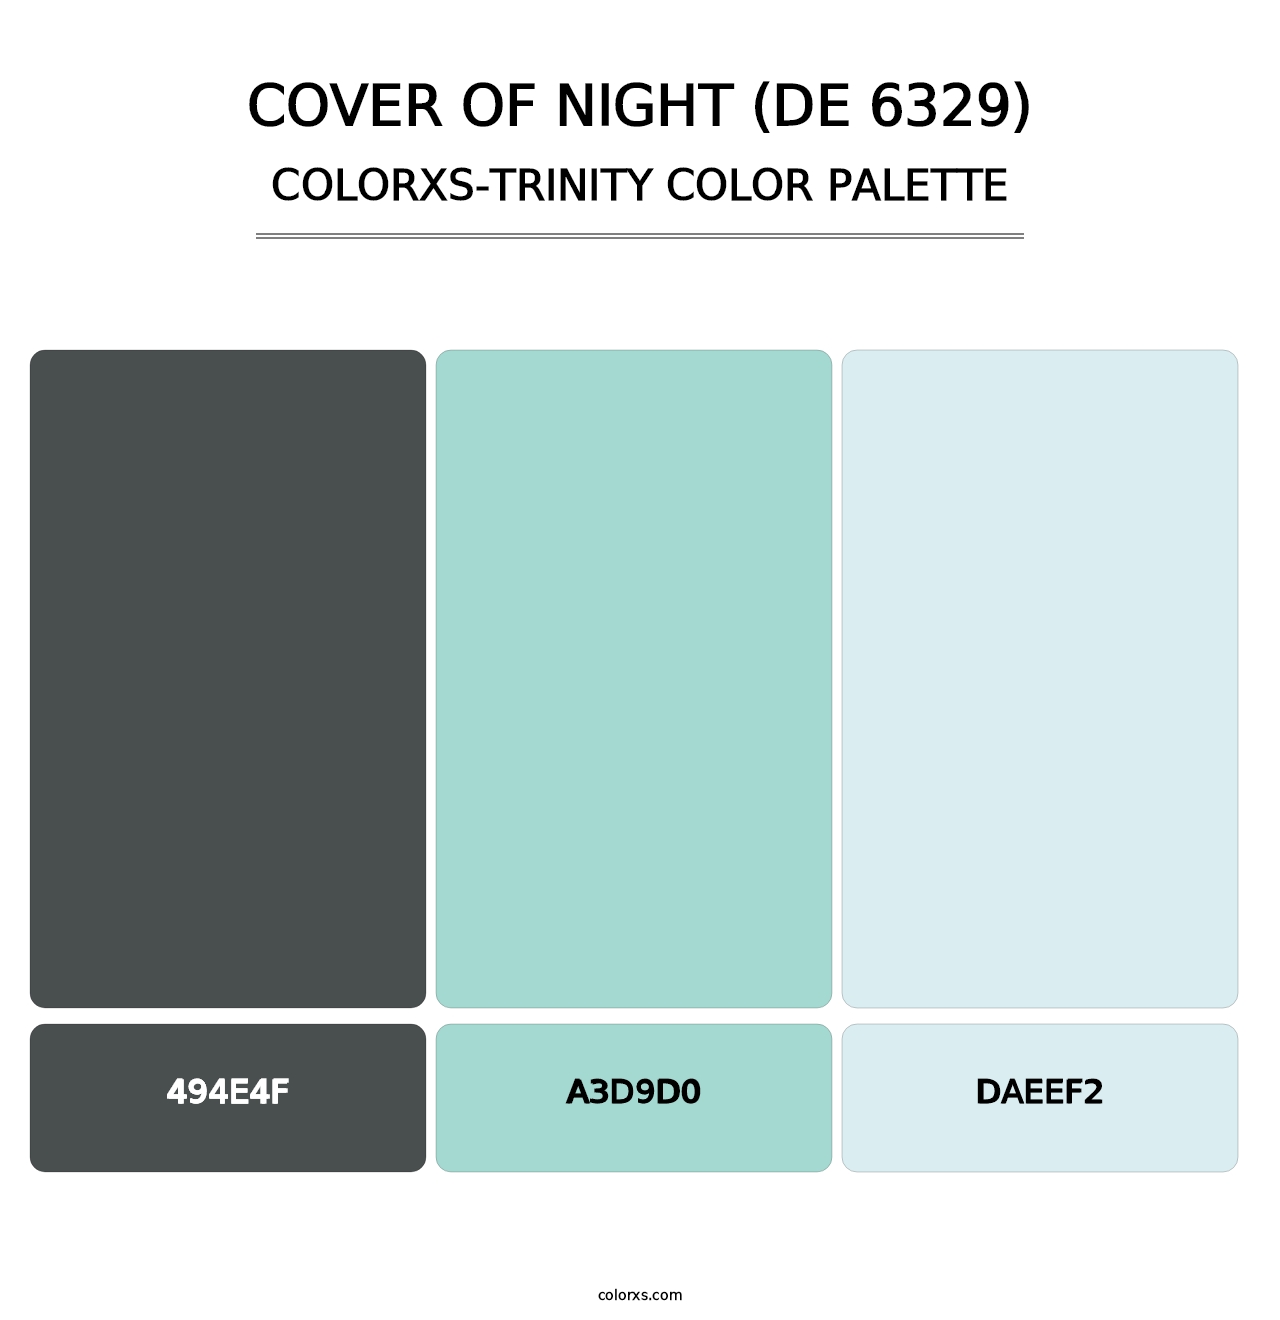 Cover of Night (DE 6329) - Colorxs Trinity Palette